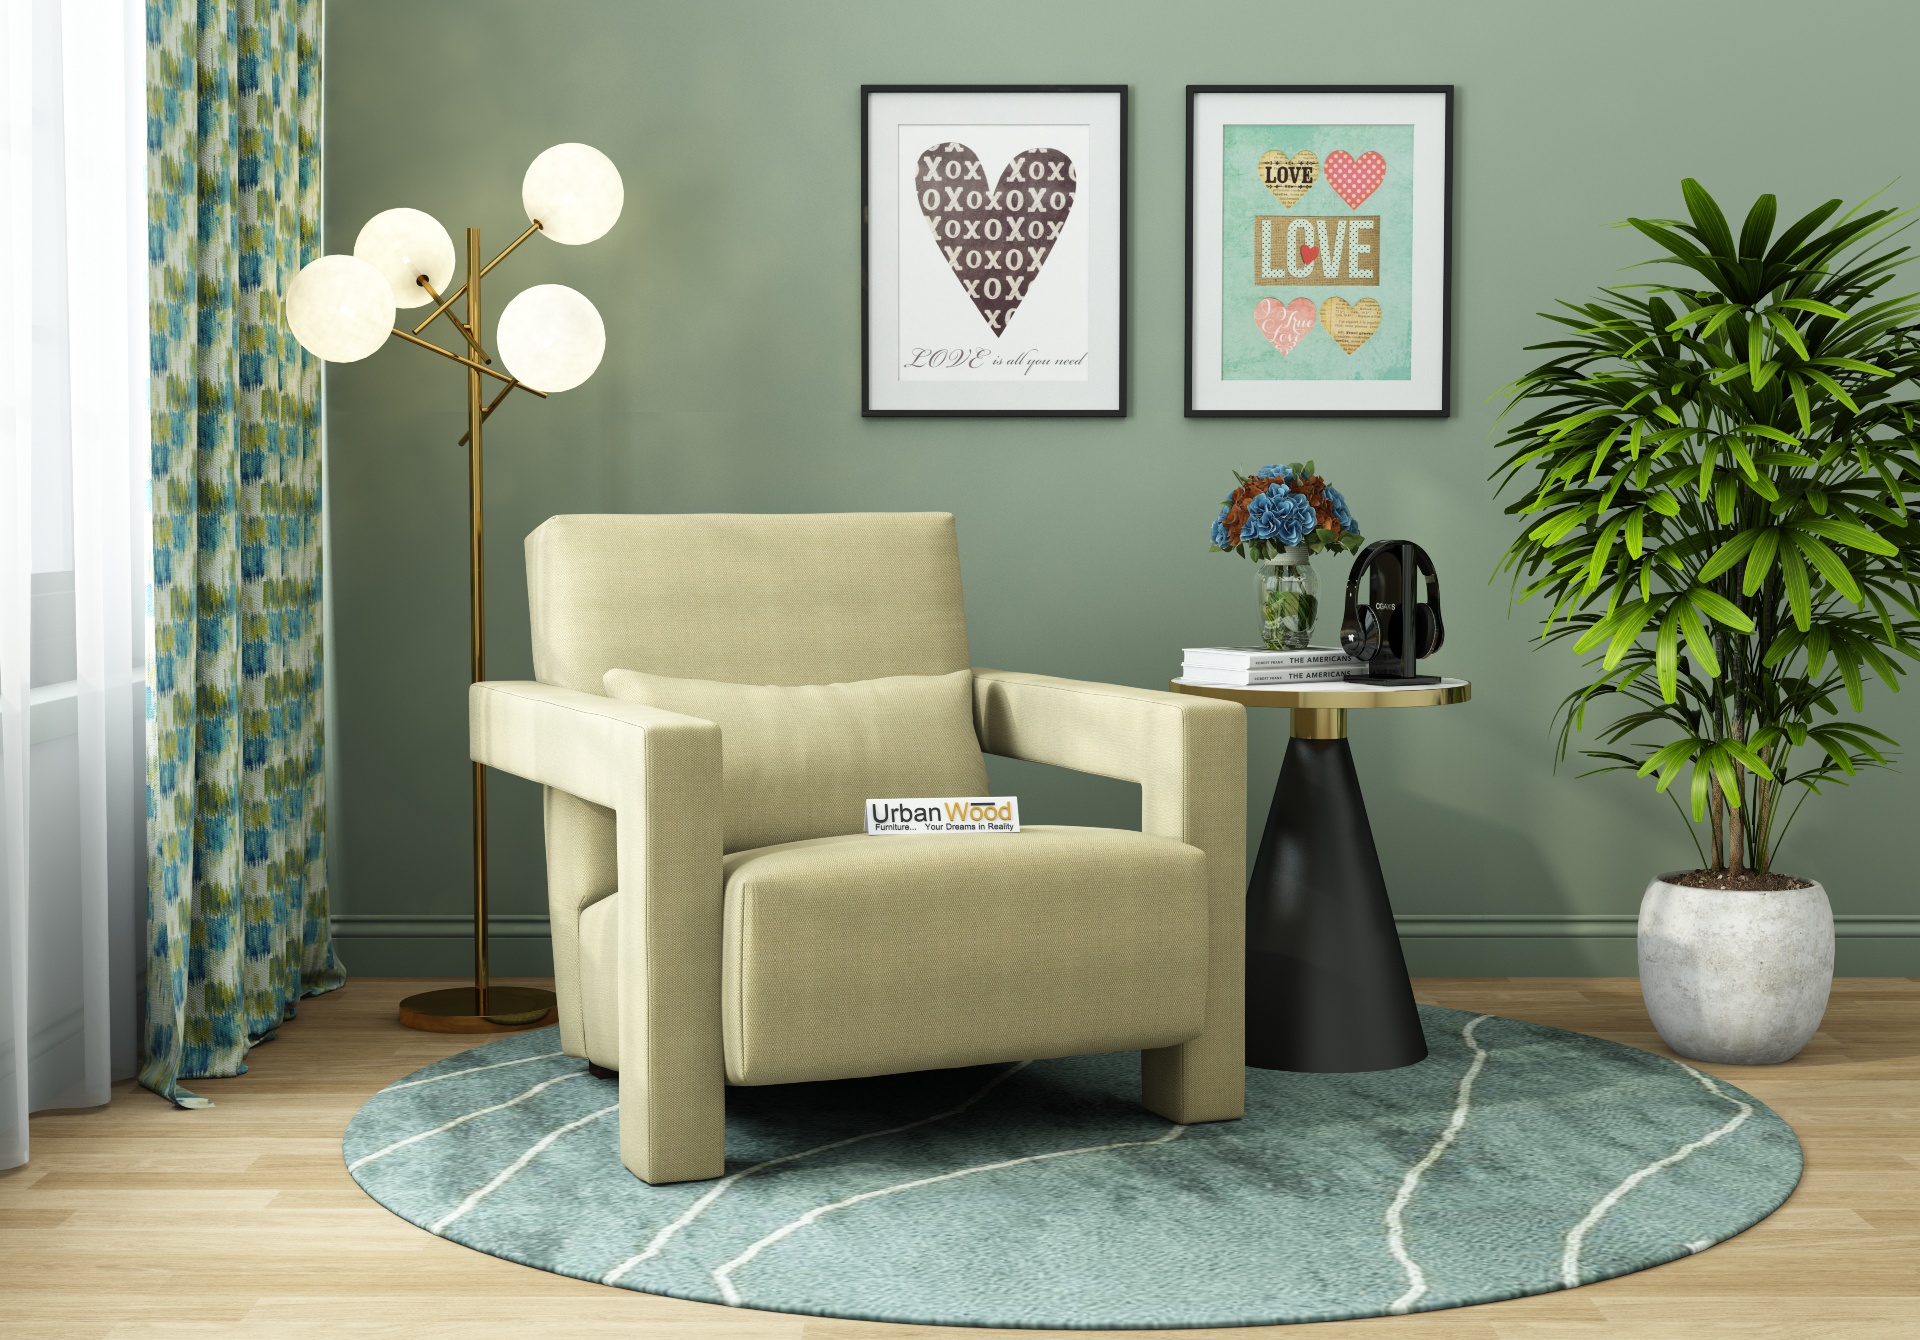 Birdie Lounge Chairs (Fabric, Sepia Cream)